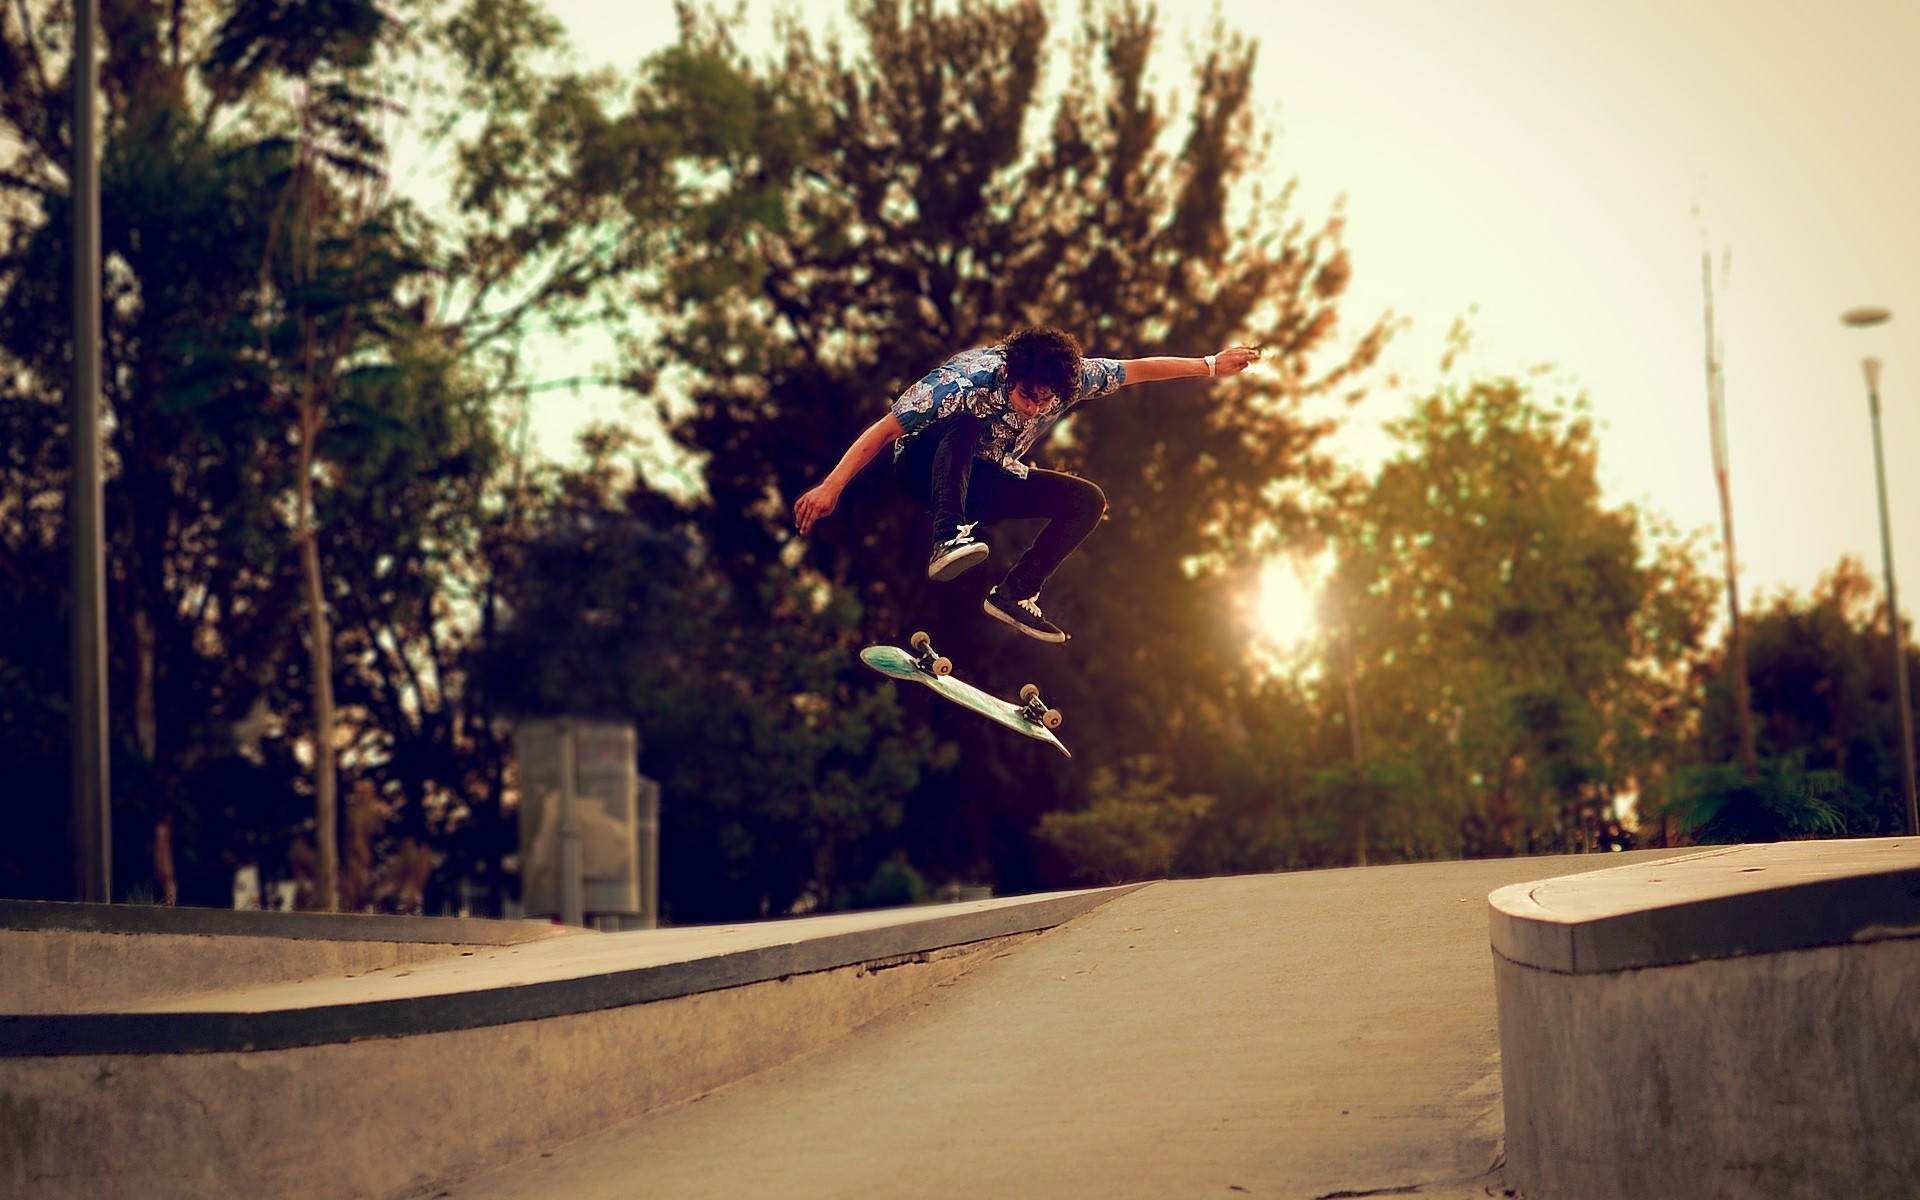 Skater Boy Nollie Trick At Sunset Background